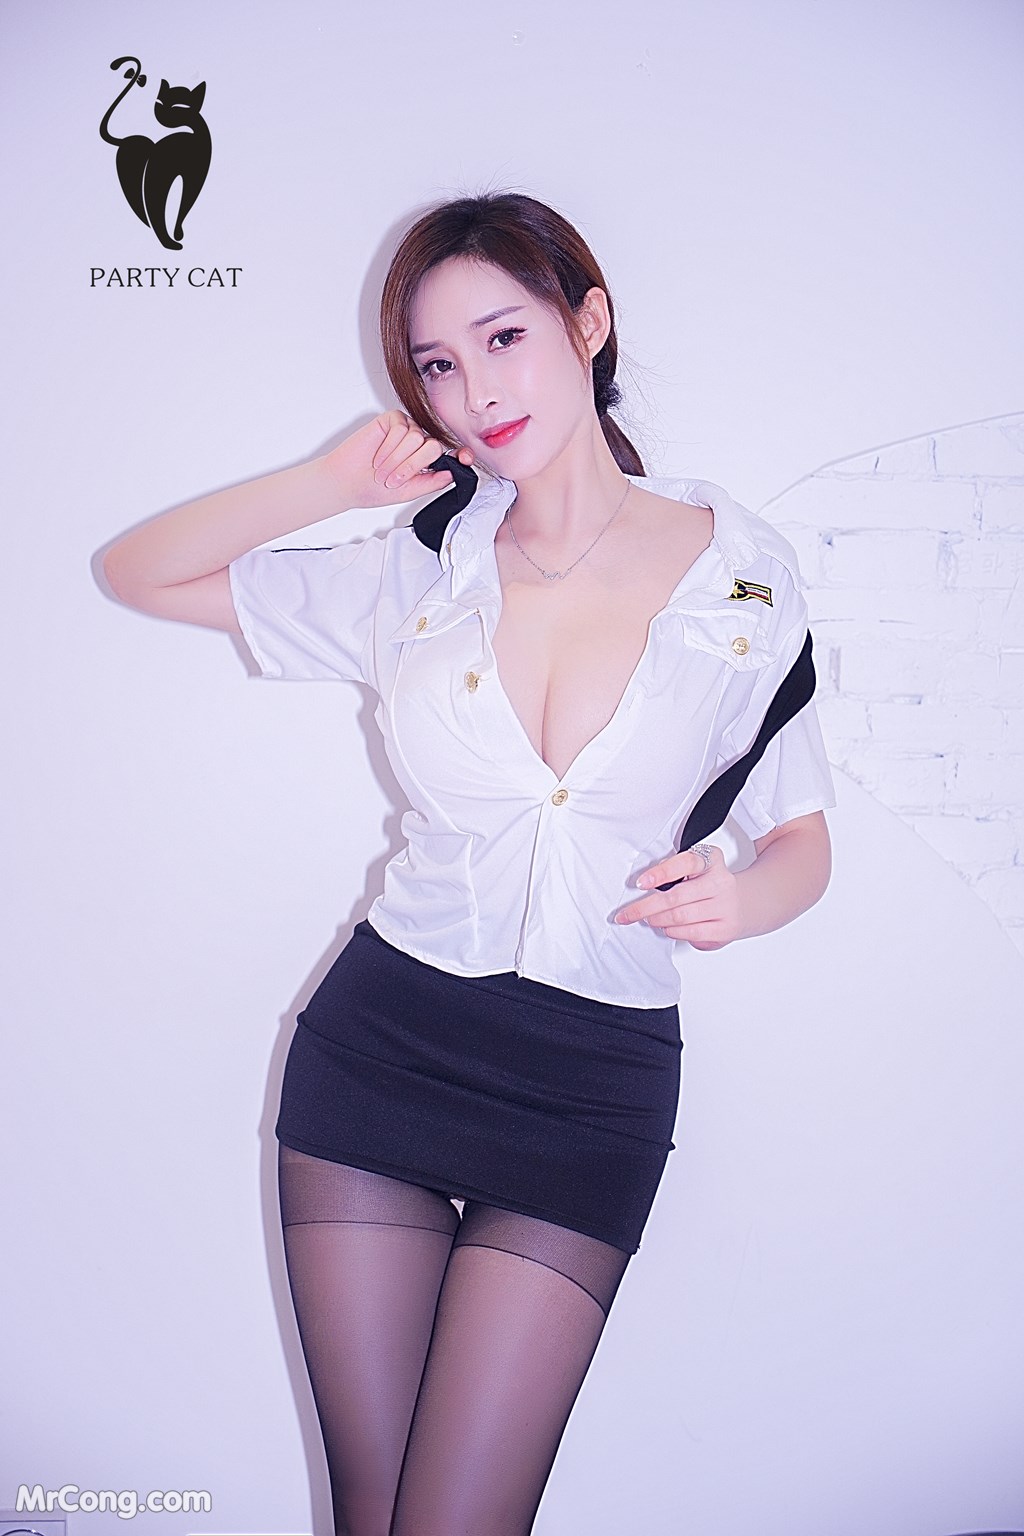 PartyCat Vol.065: Model 土肥 圆 矮 挫 穷 (Tu Fei Yuan Ai Cuo Qiong) (50 photos) photo 2-6